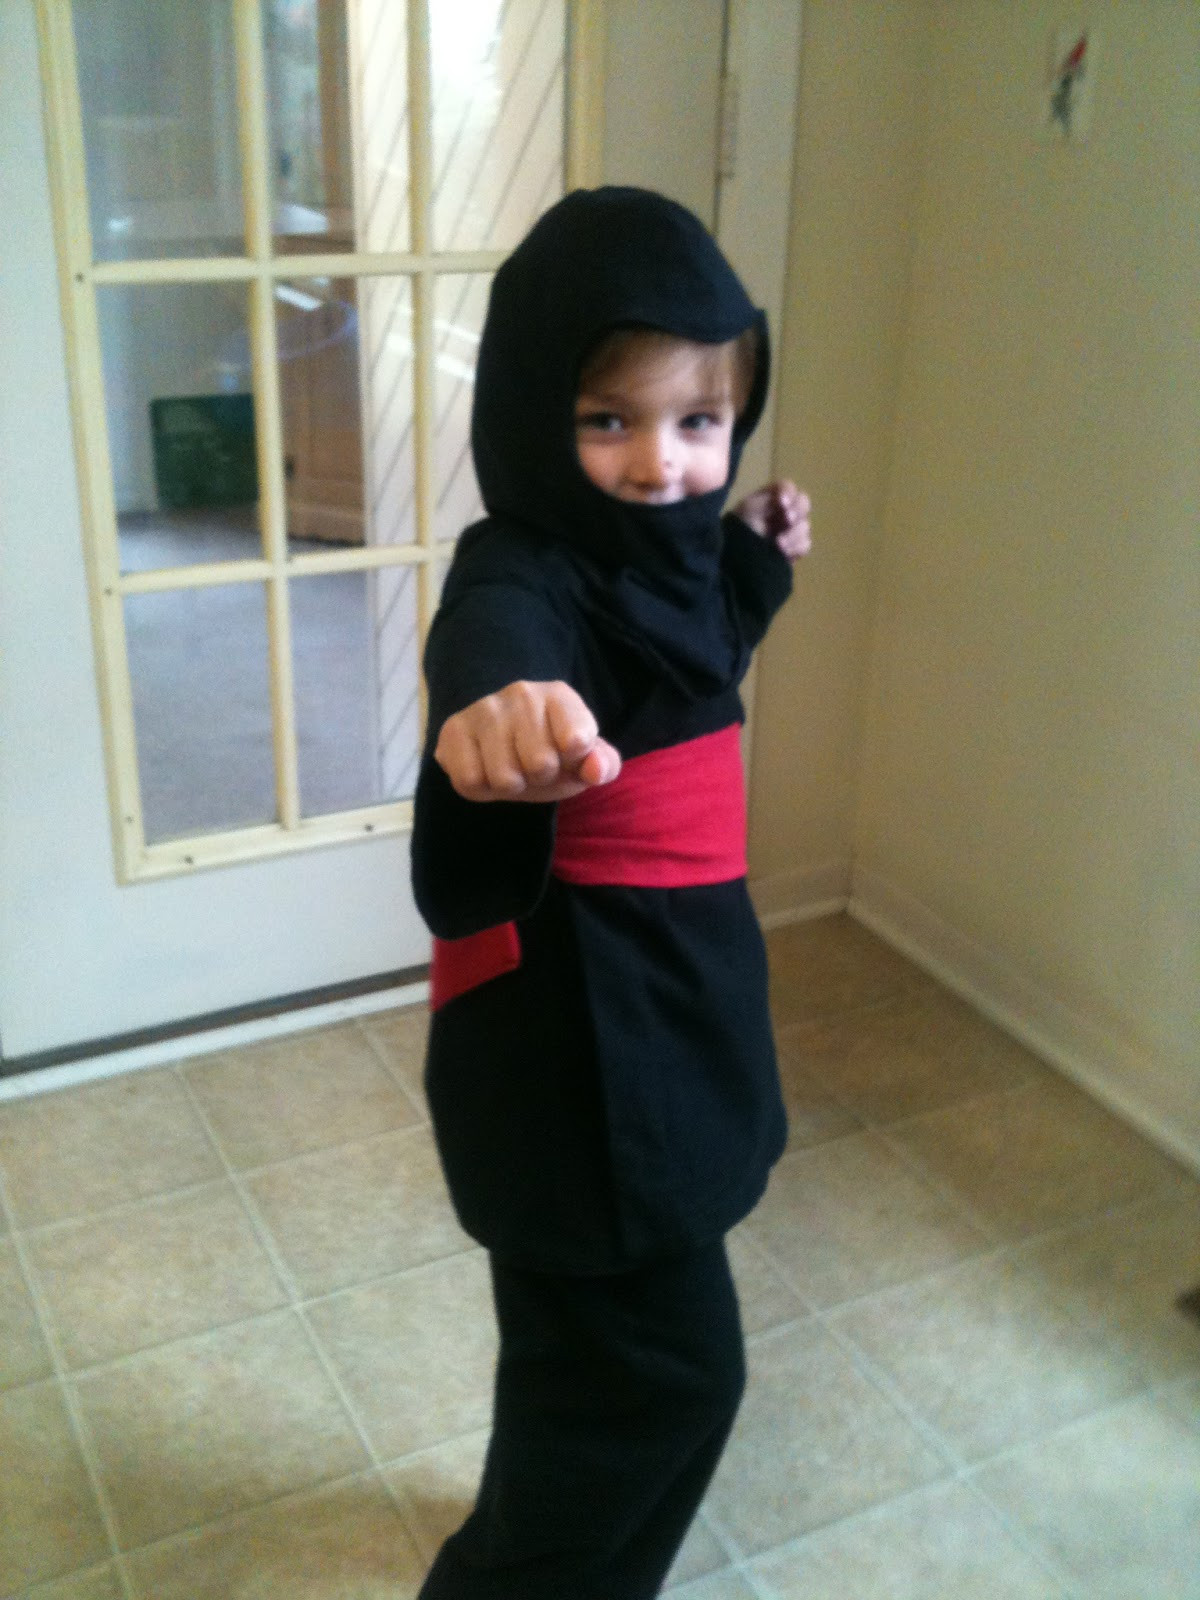 Best ideas about DIY Ninja Costume
. Save or Pin jaimalaya Homemade Friday The Fierce Ninja Costume Now.